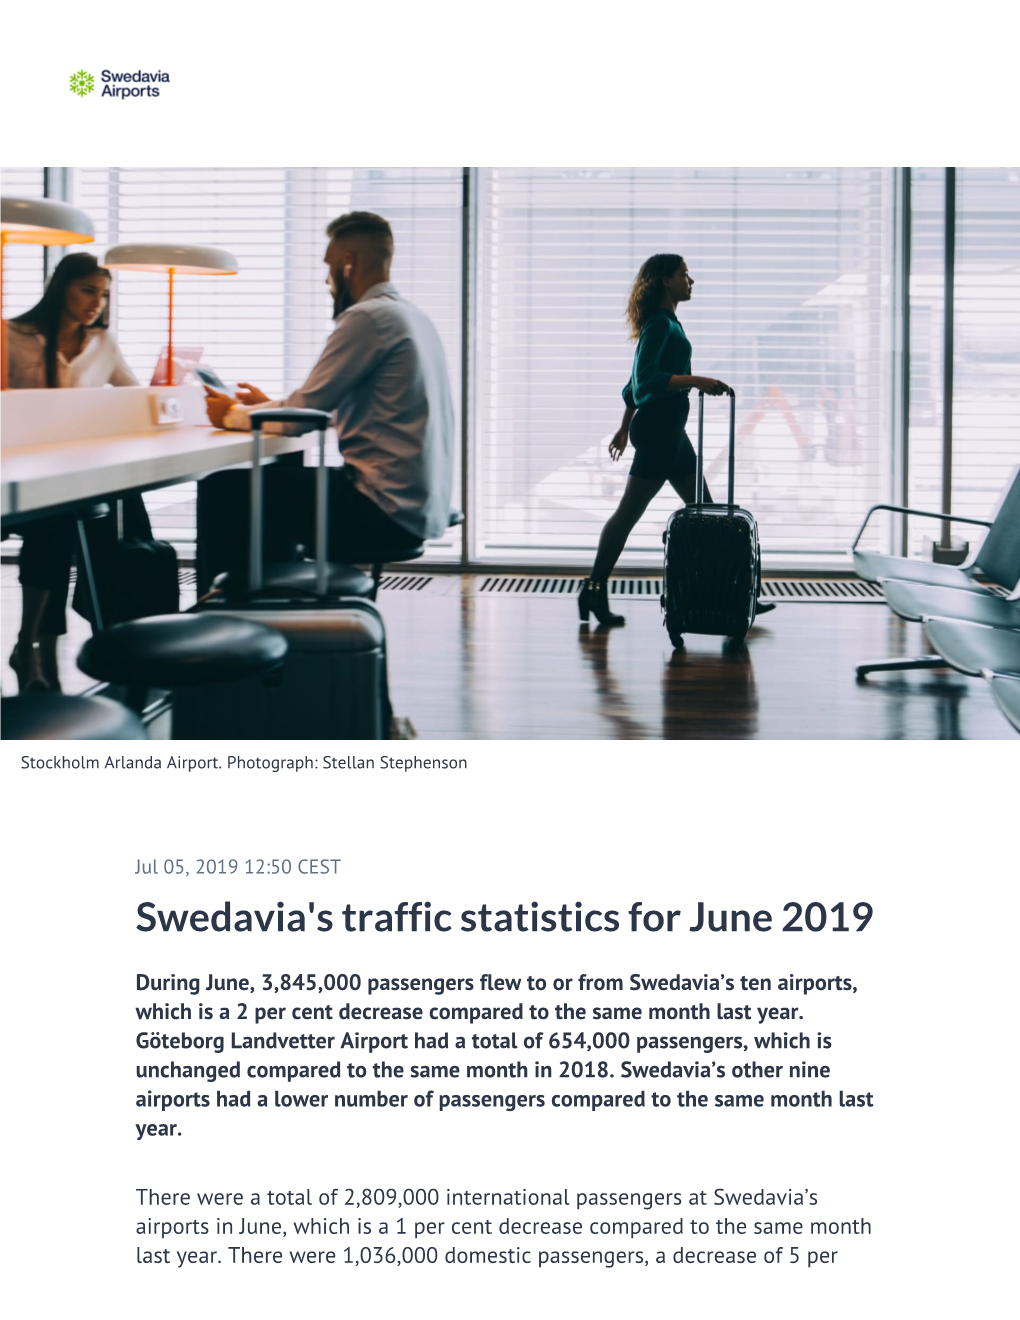 Swedavia's Traffic Statistics for June 2019